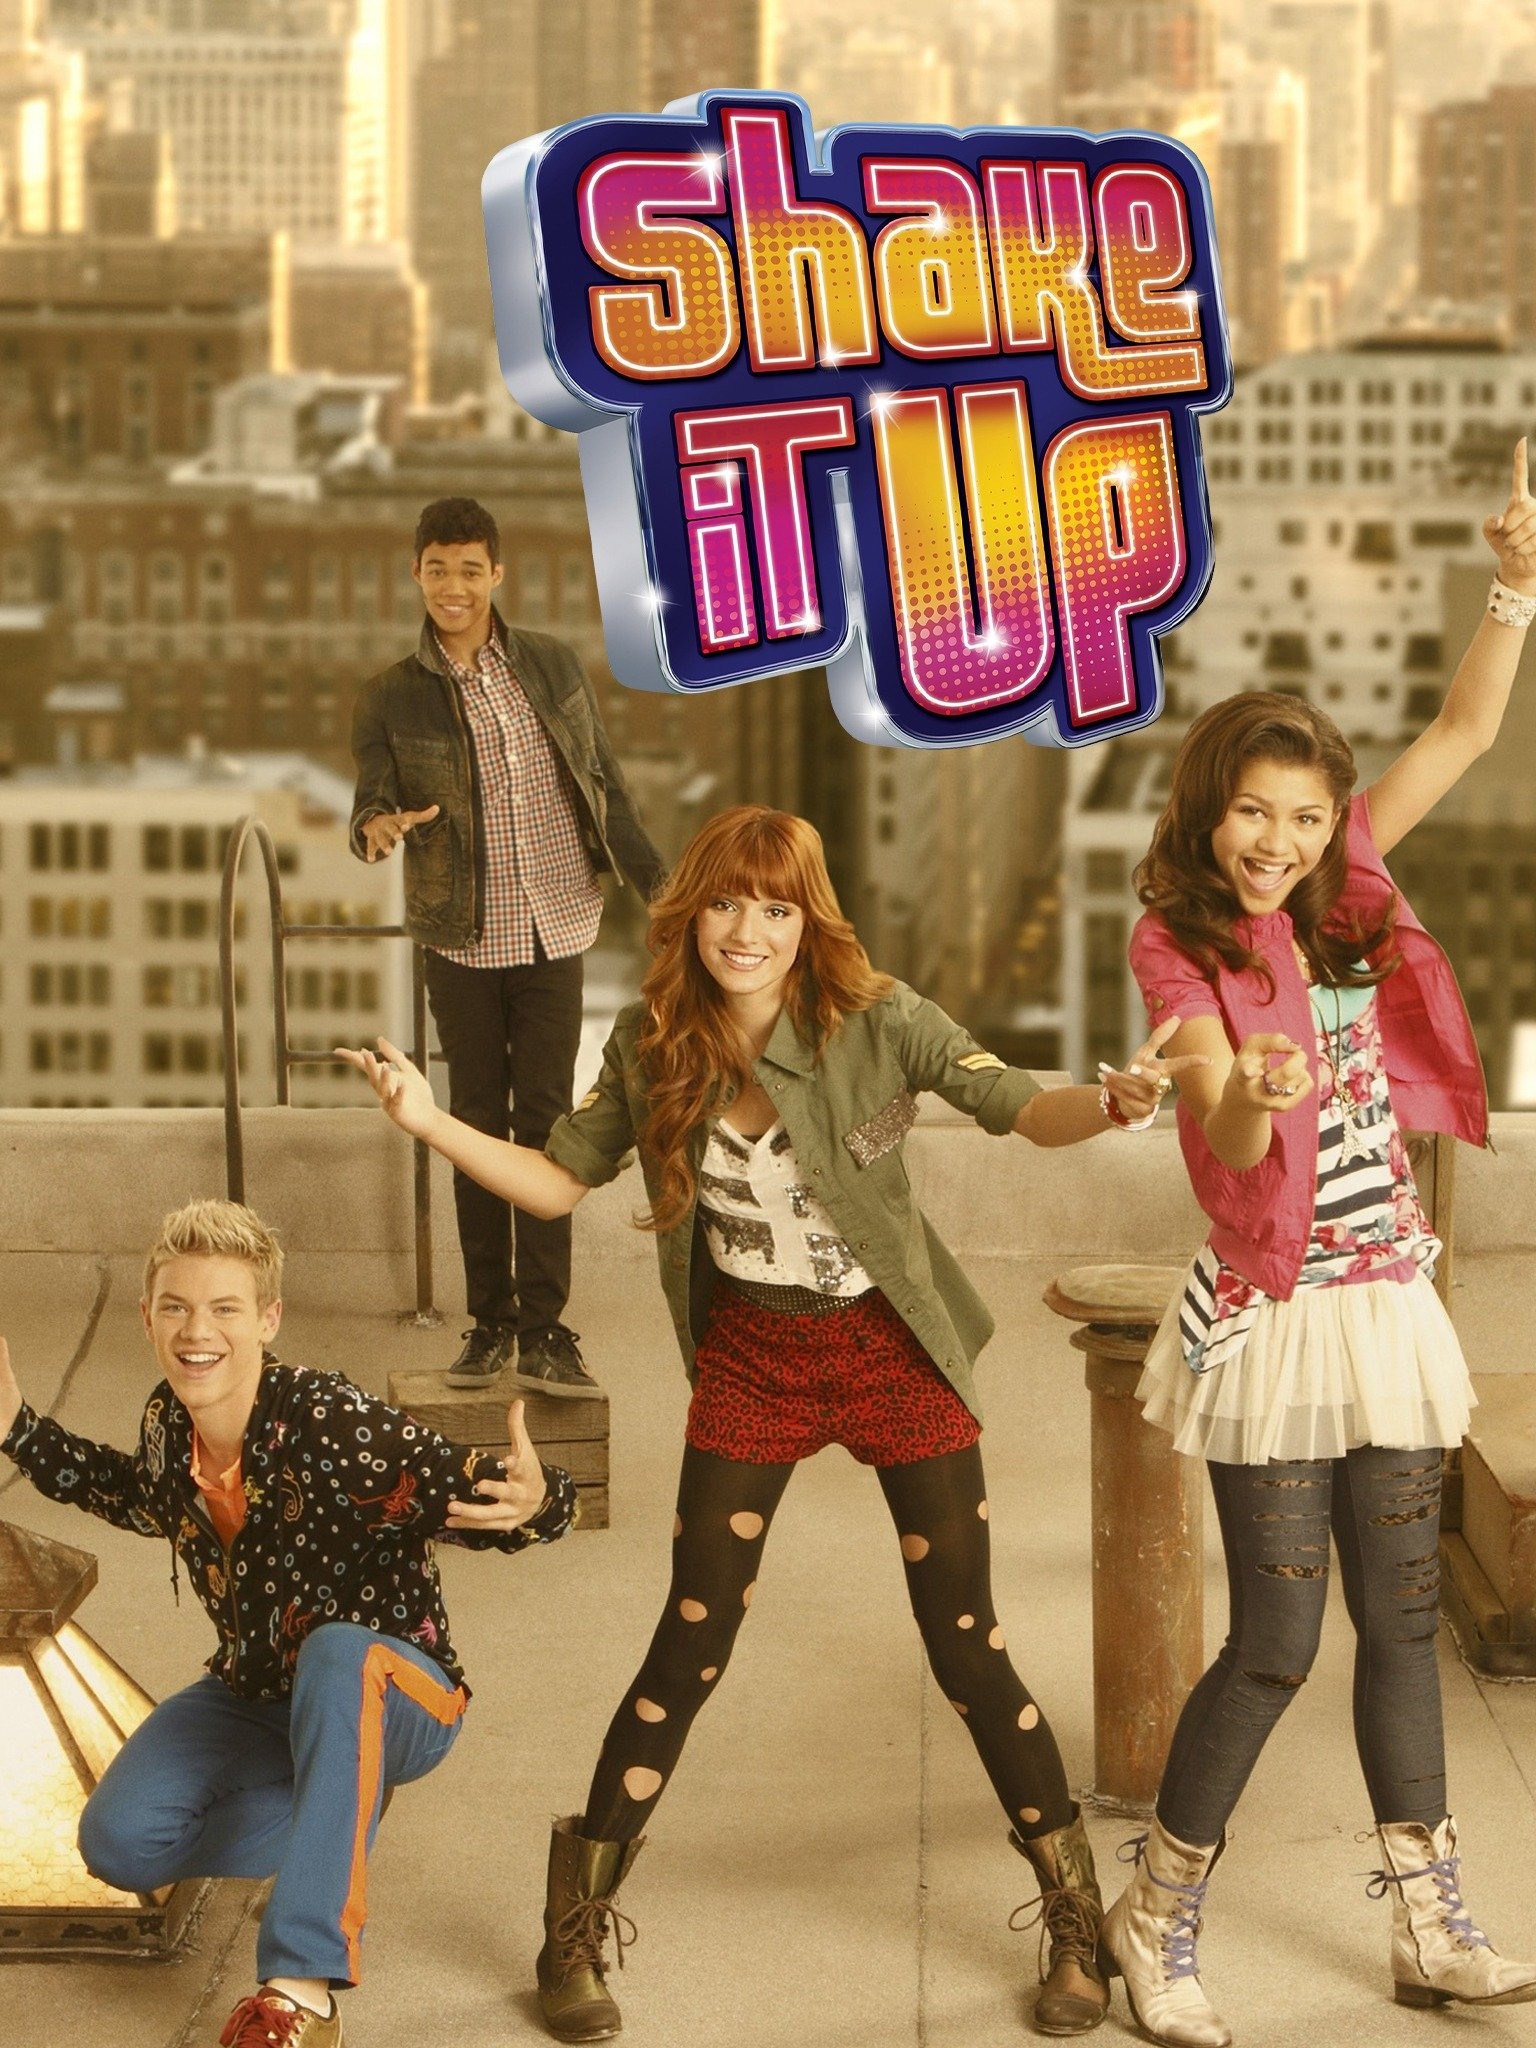 Shake It Up!